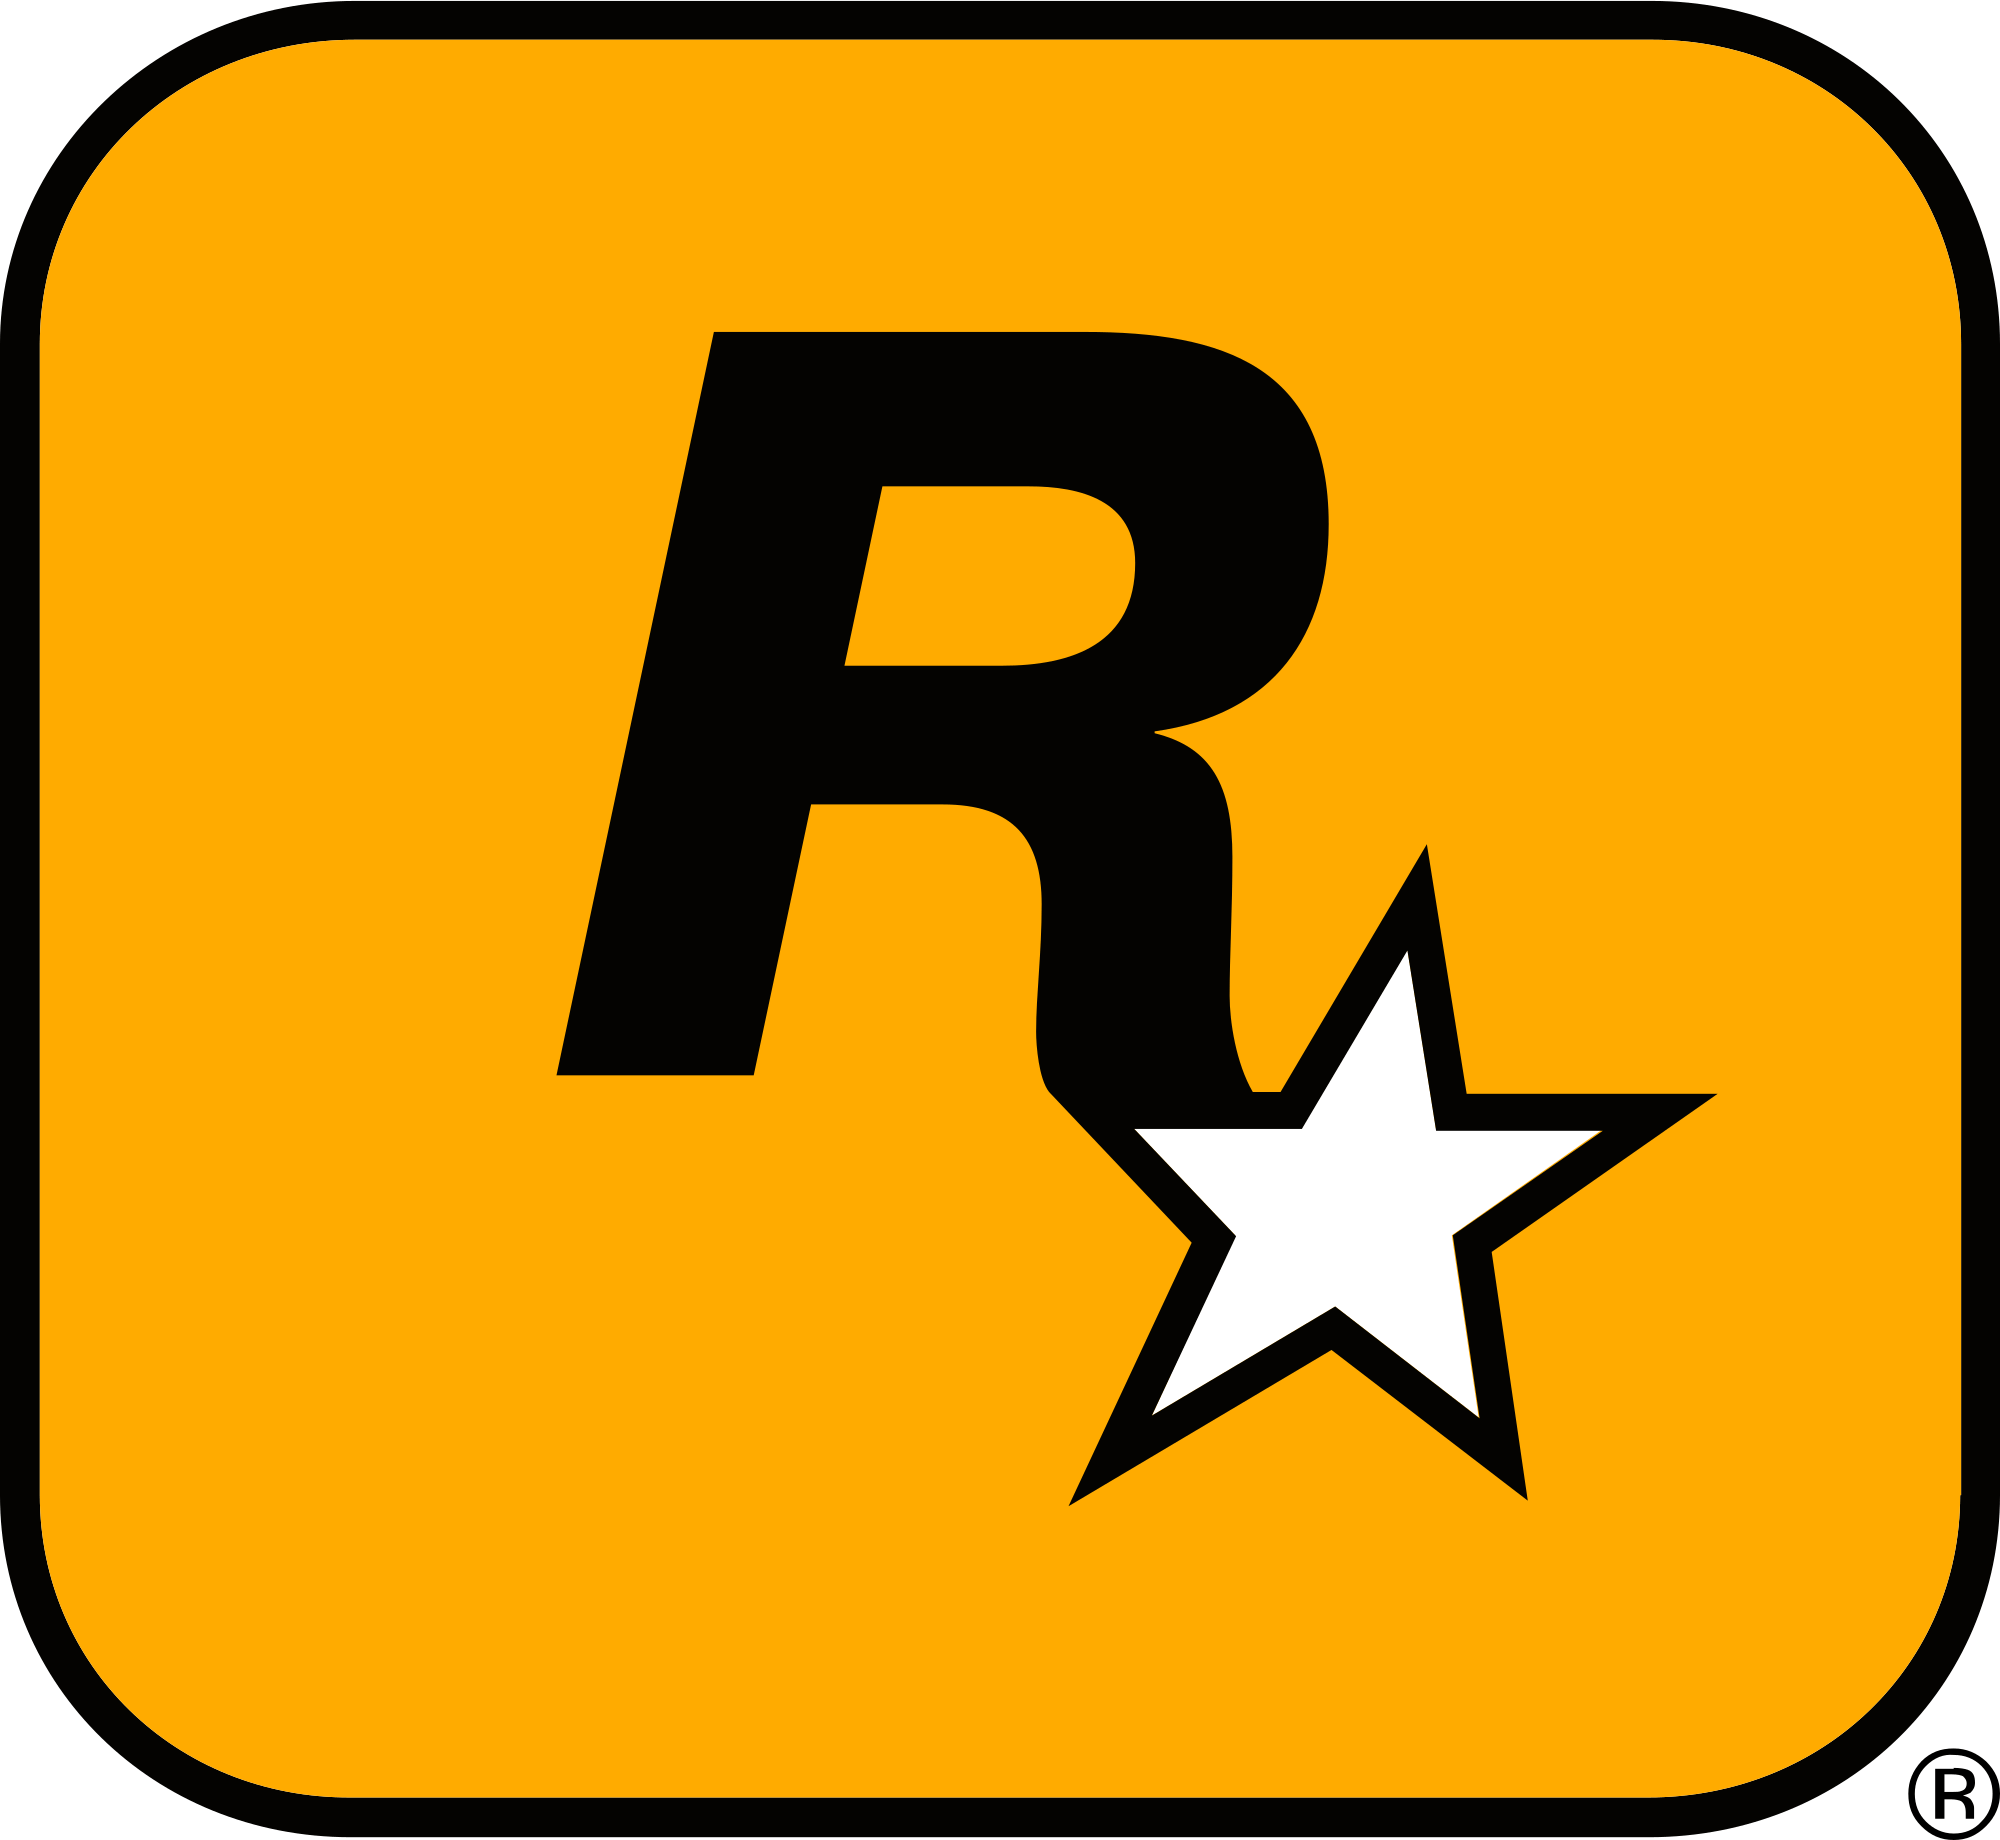 R And A Yellow Star Logo Logodix